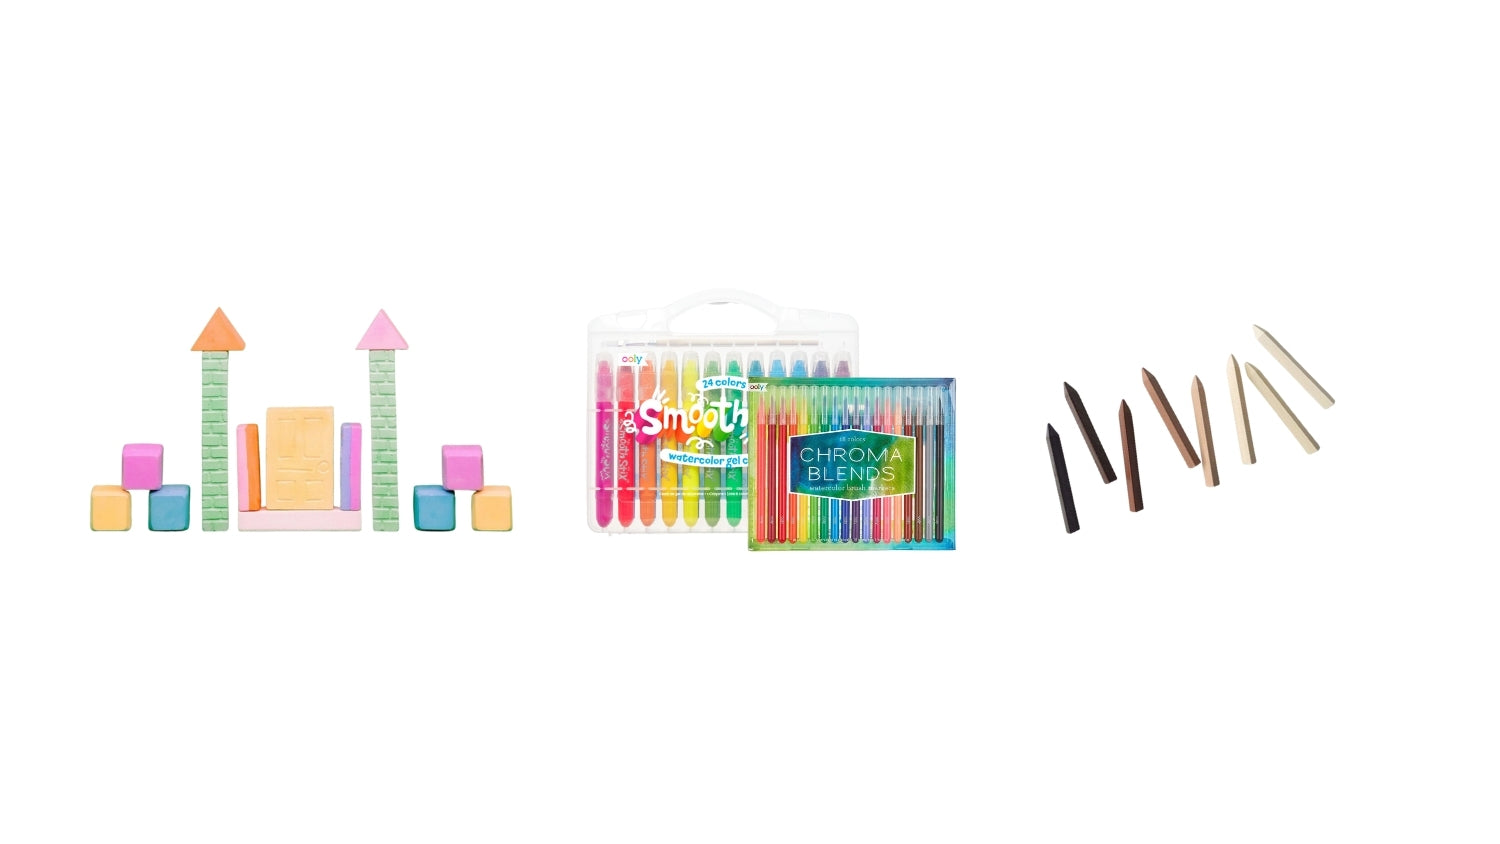  ArtCreativity Mini Crayon Sets for Kids, 12 Pack